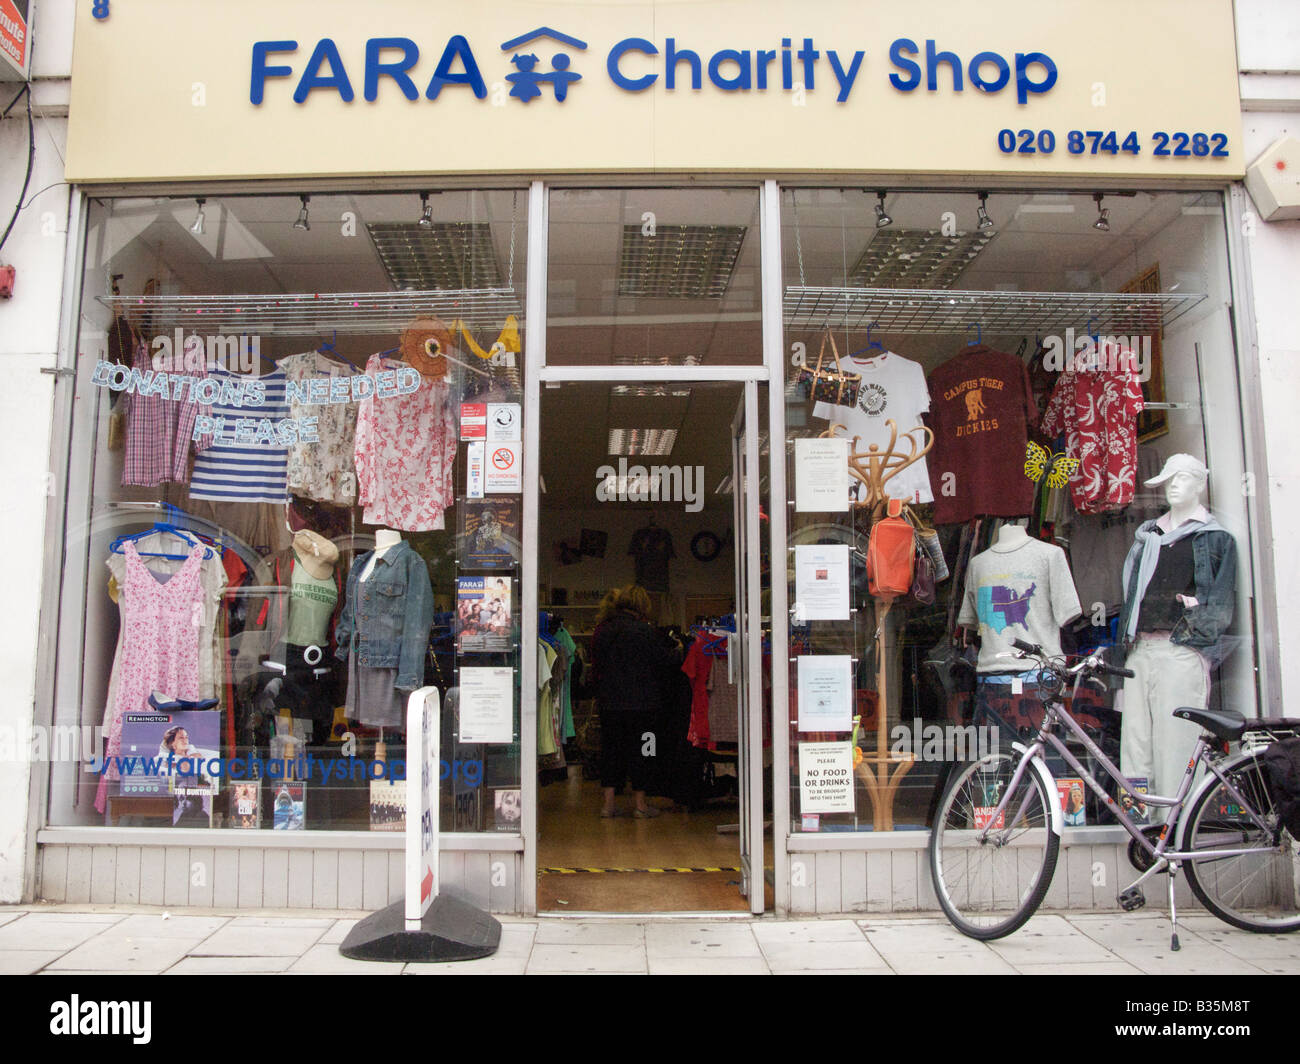 'fara' charity shop Stock Photo